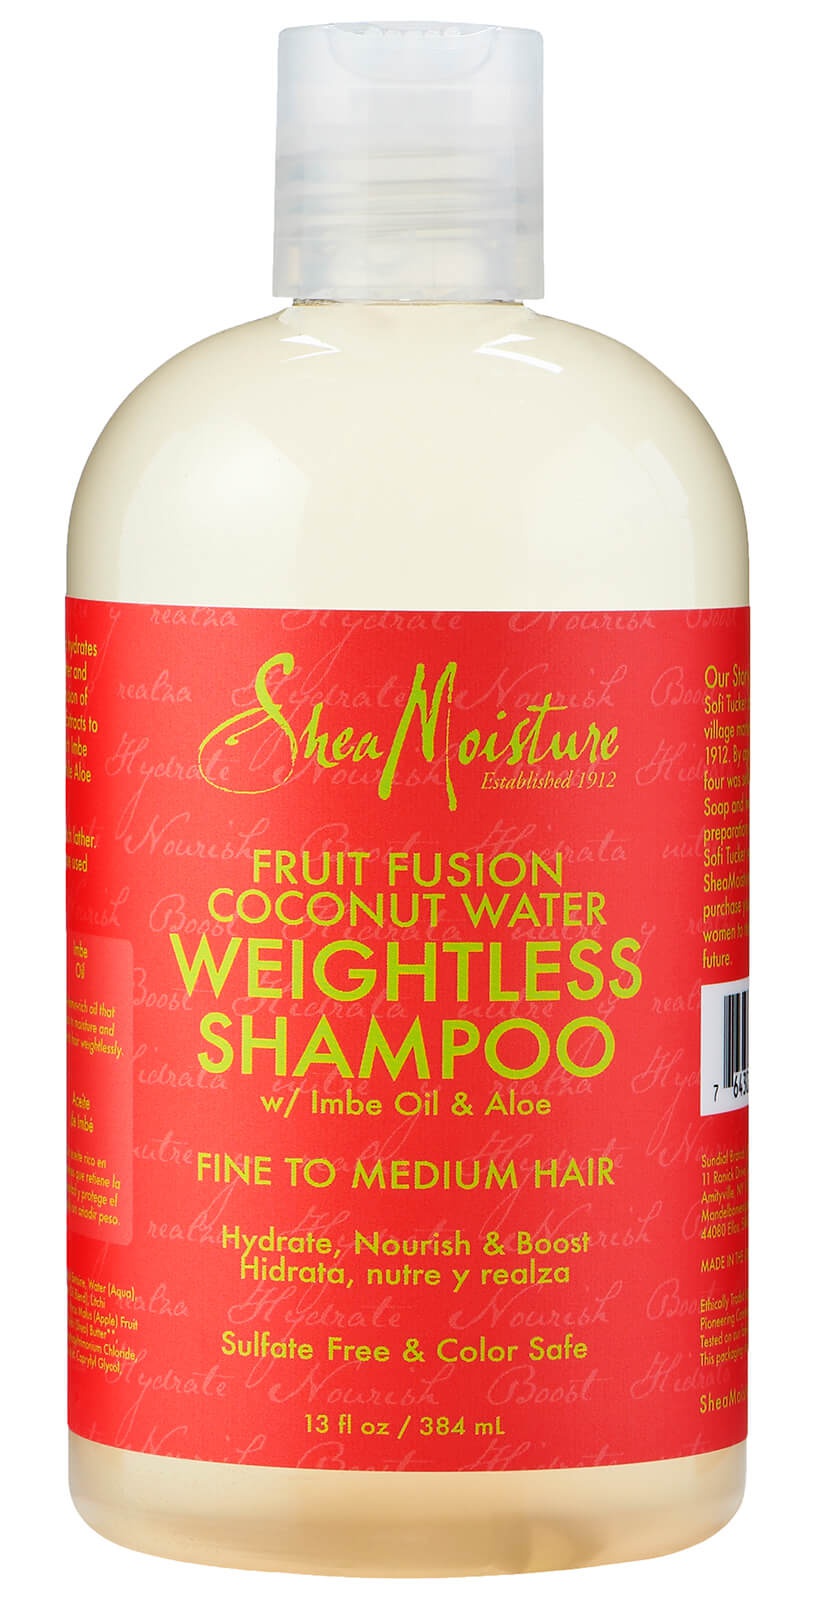 Shea Moisture Fruit Fusion Coconut Water Weightless Shampoo